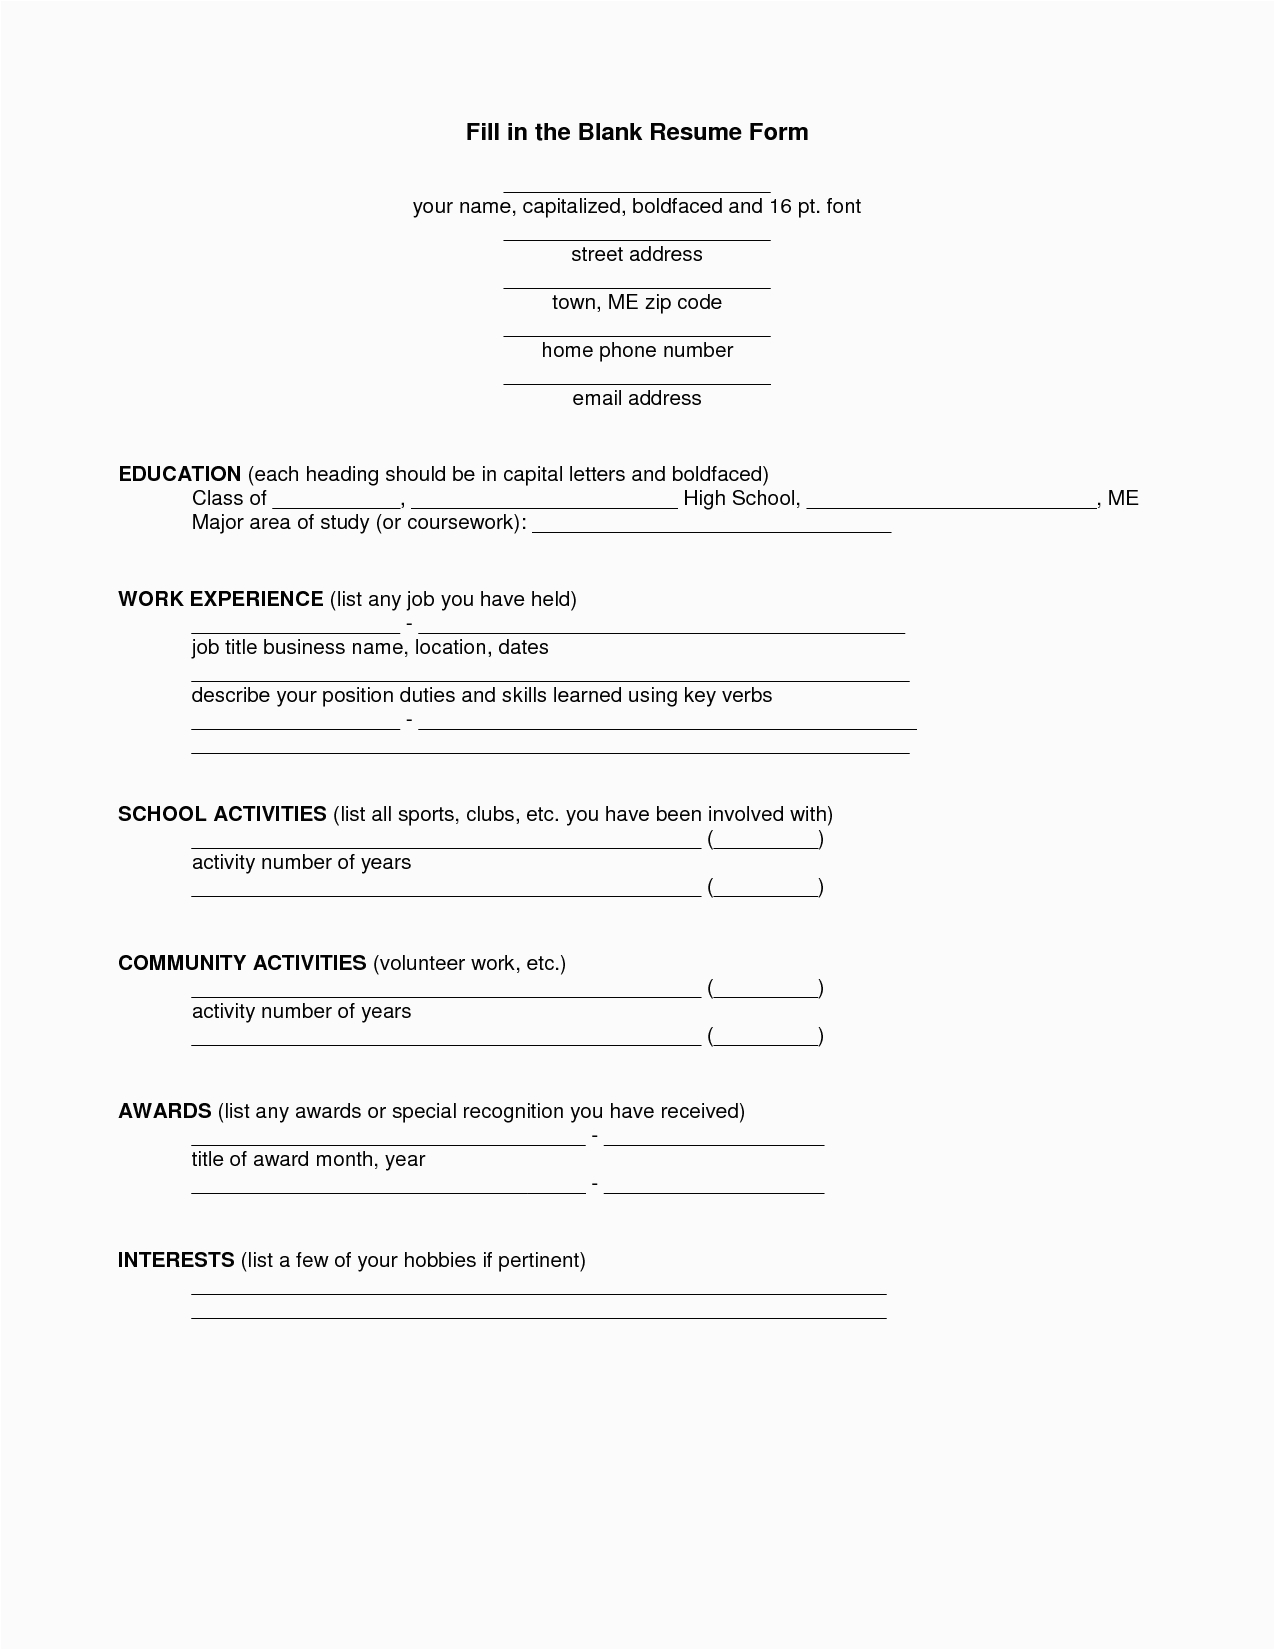 30 fill in blank resume worksheet